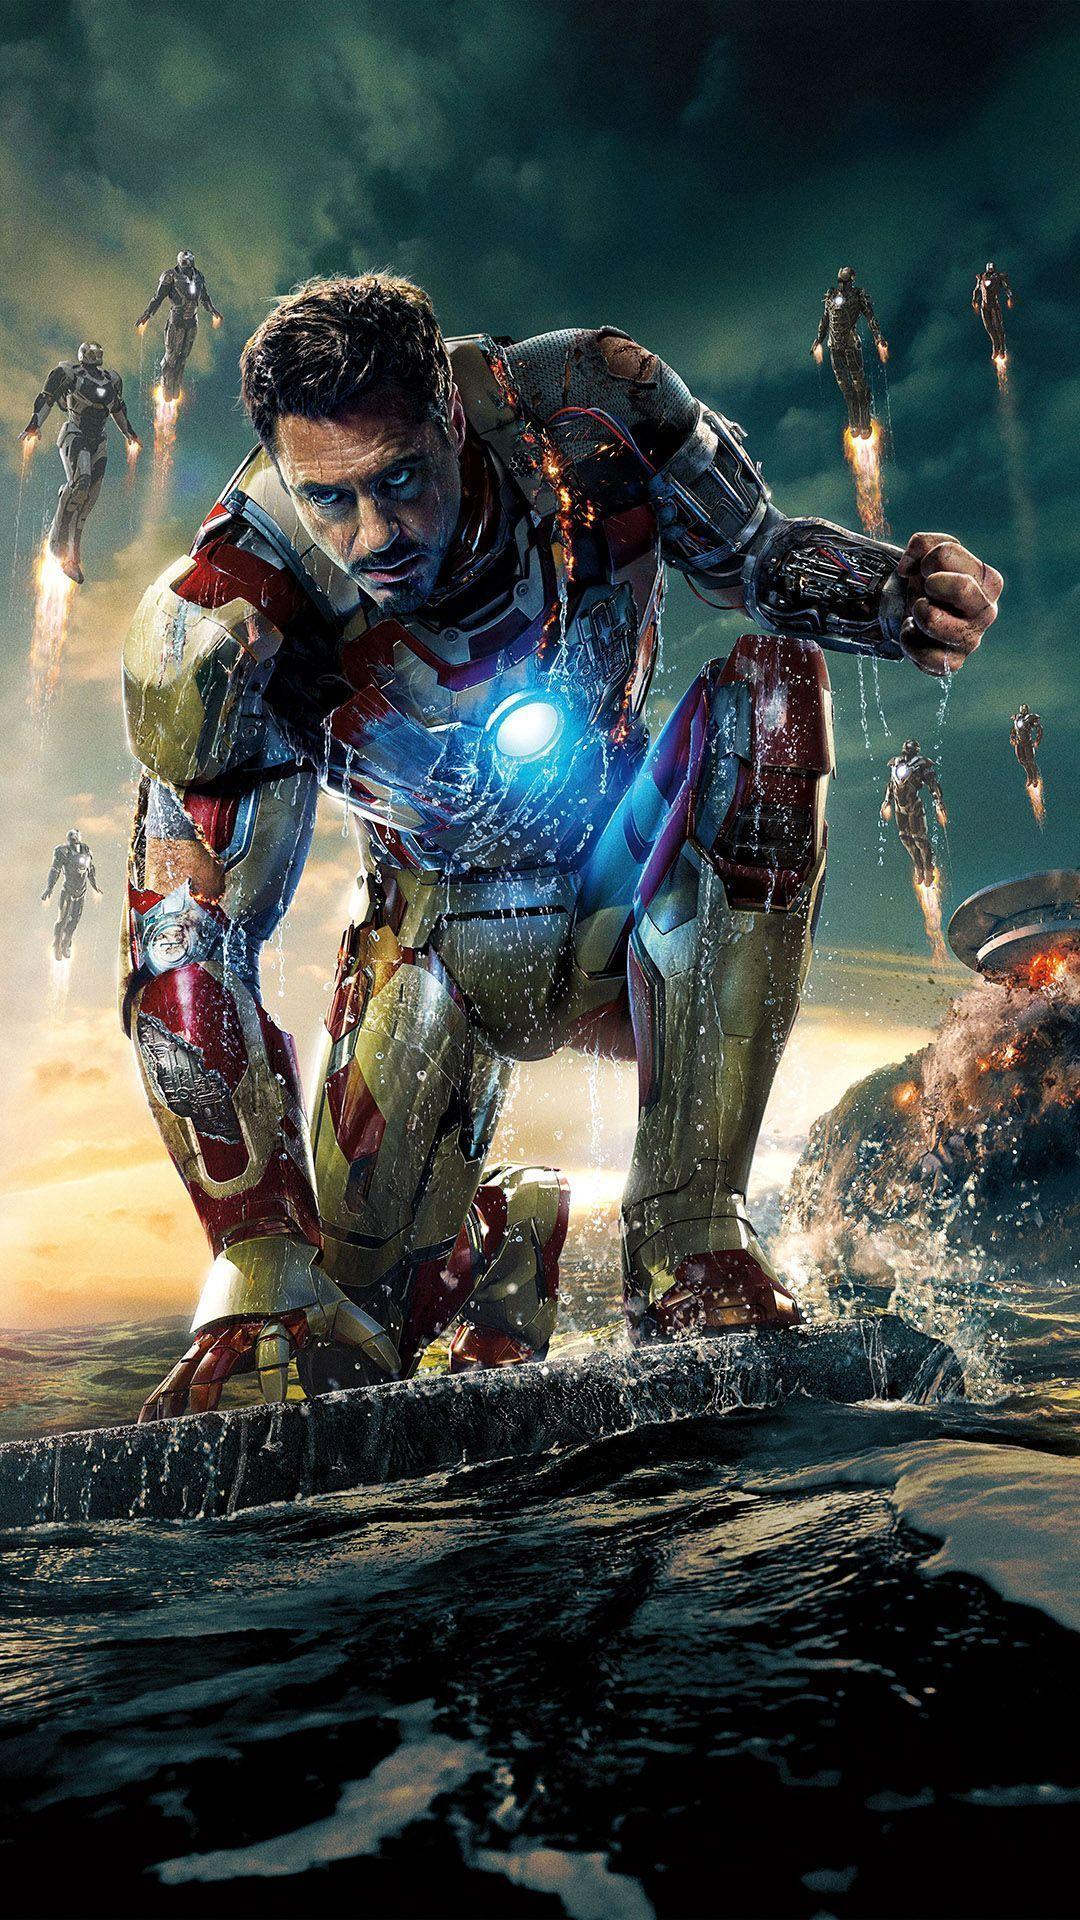 Iron Man 3 instal the new